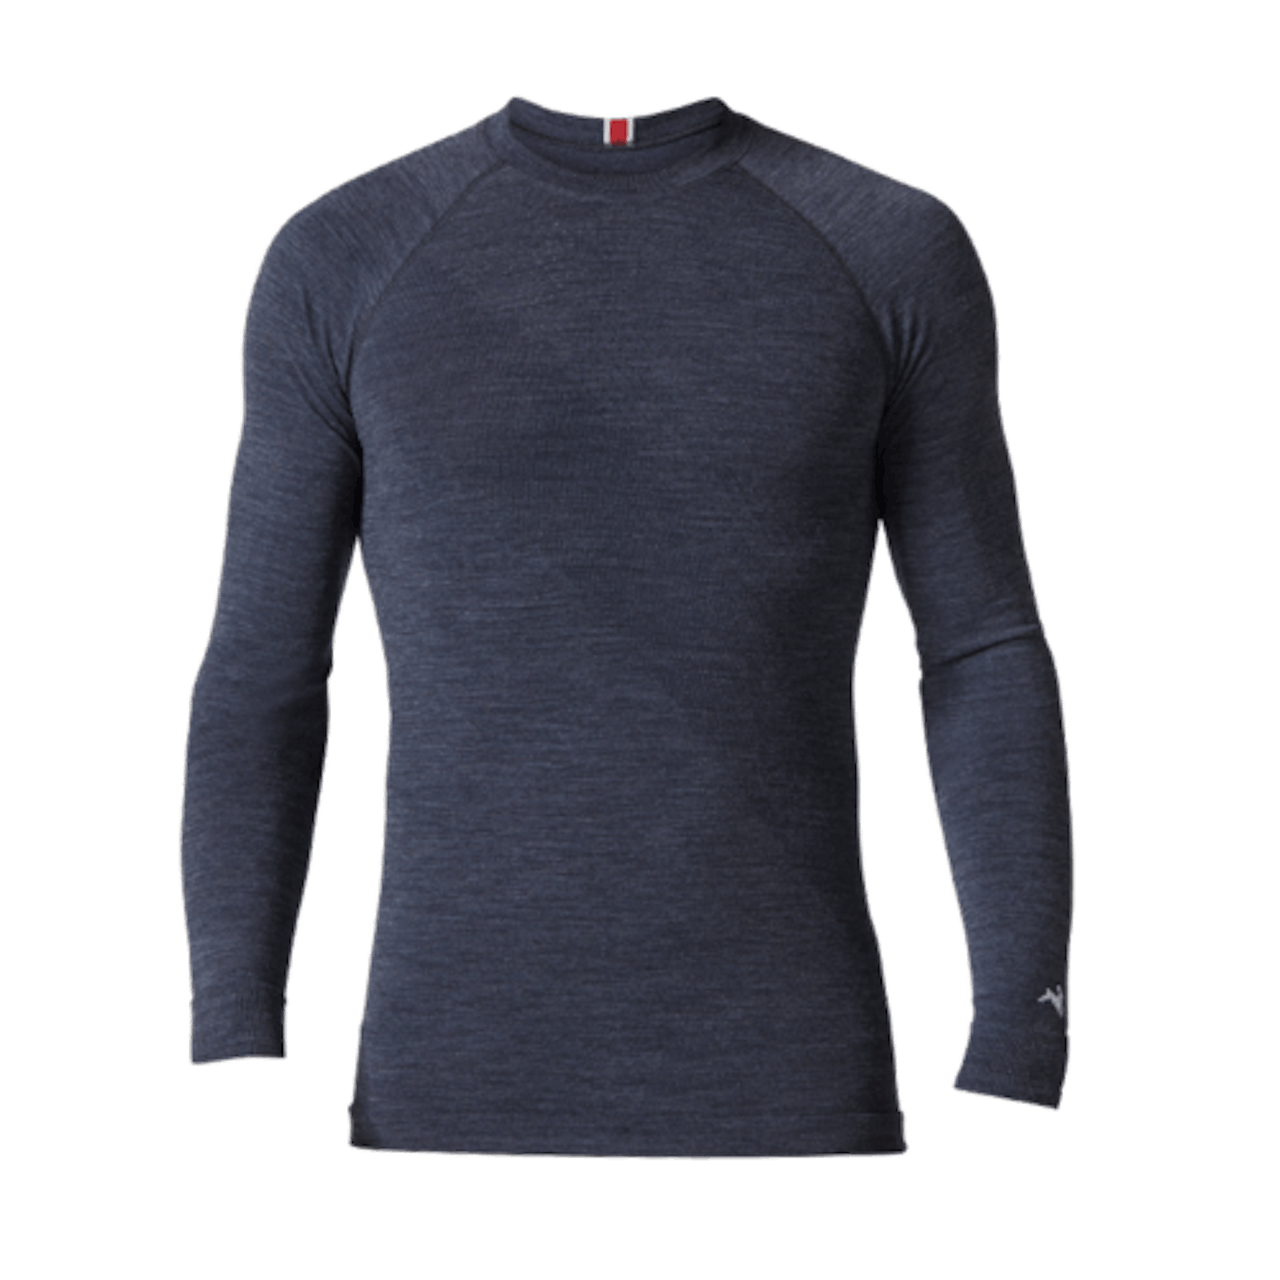 Men's seamless thermal underwear with Merino wool (top) - black